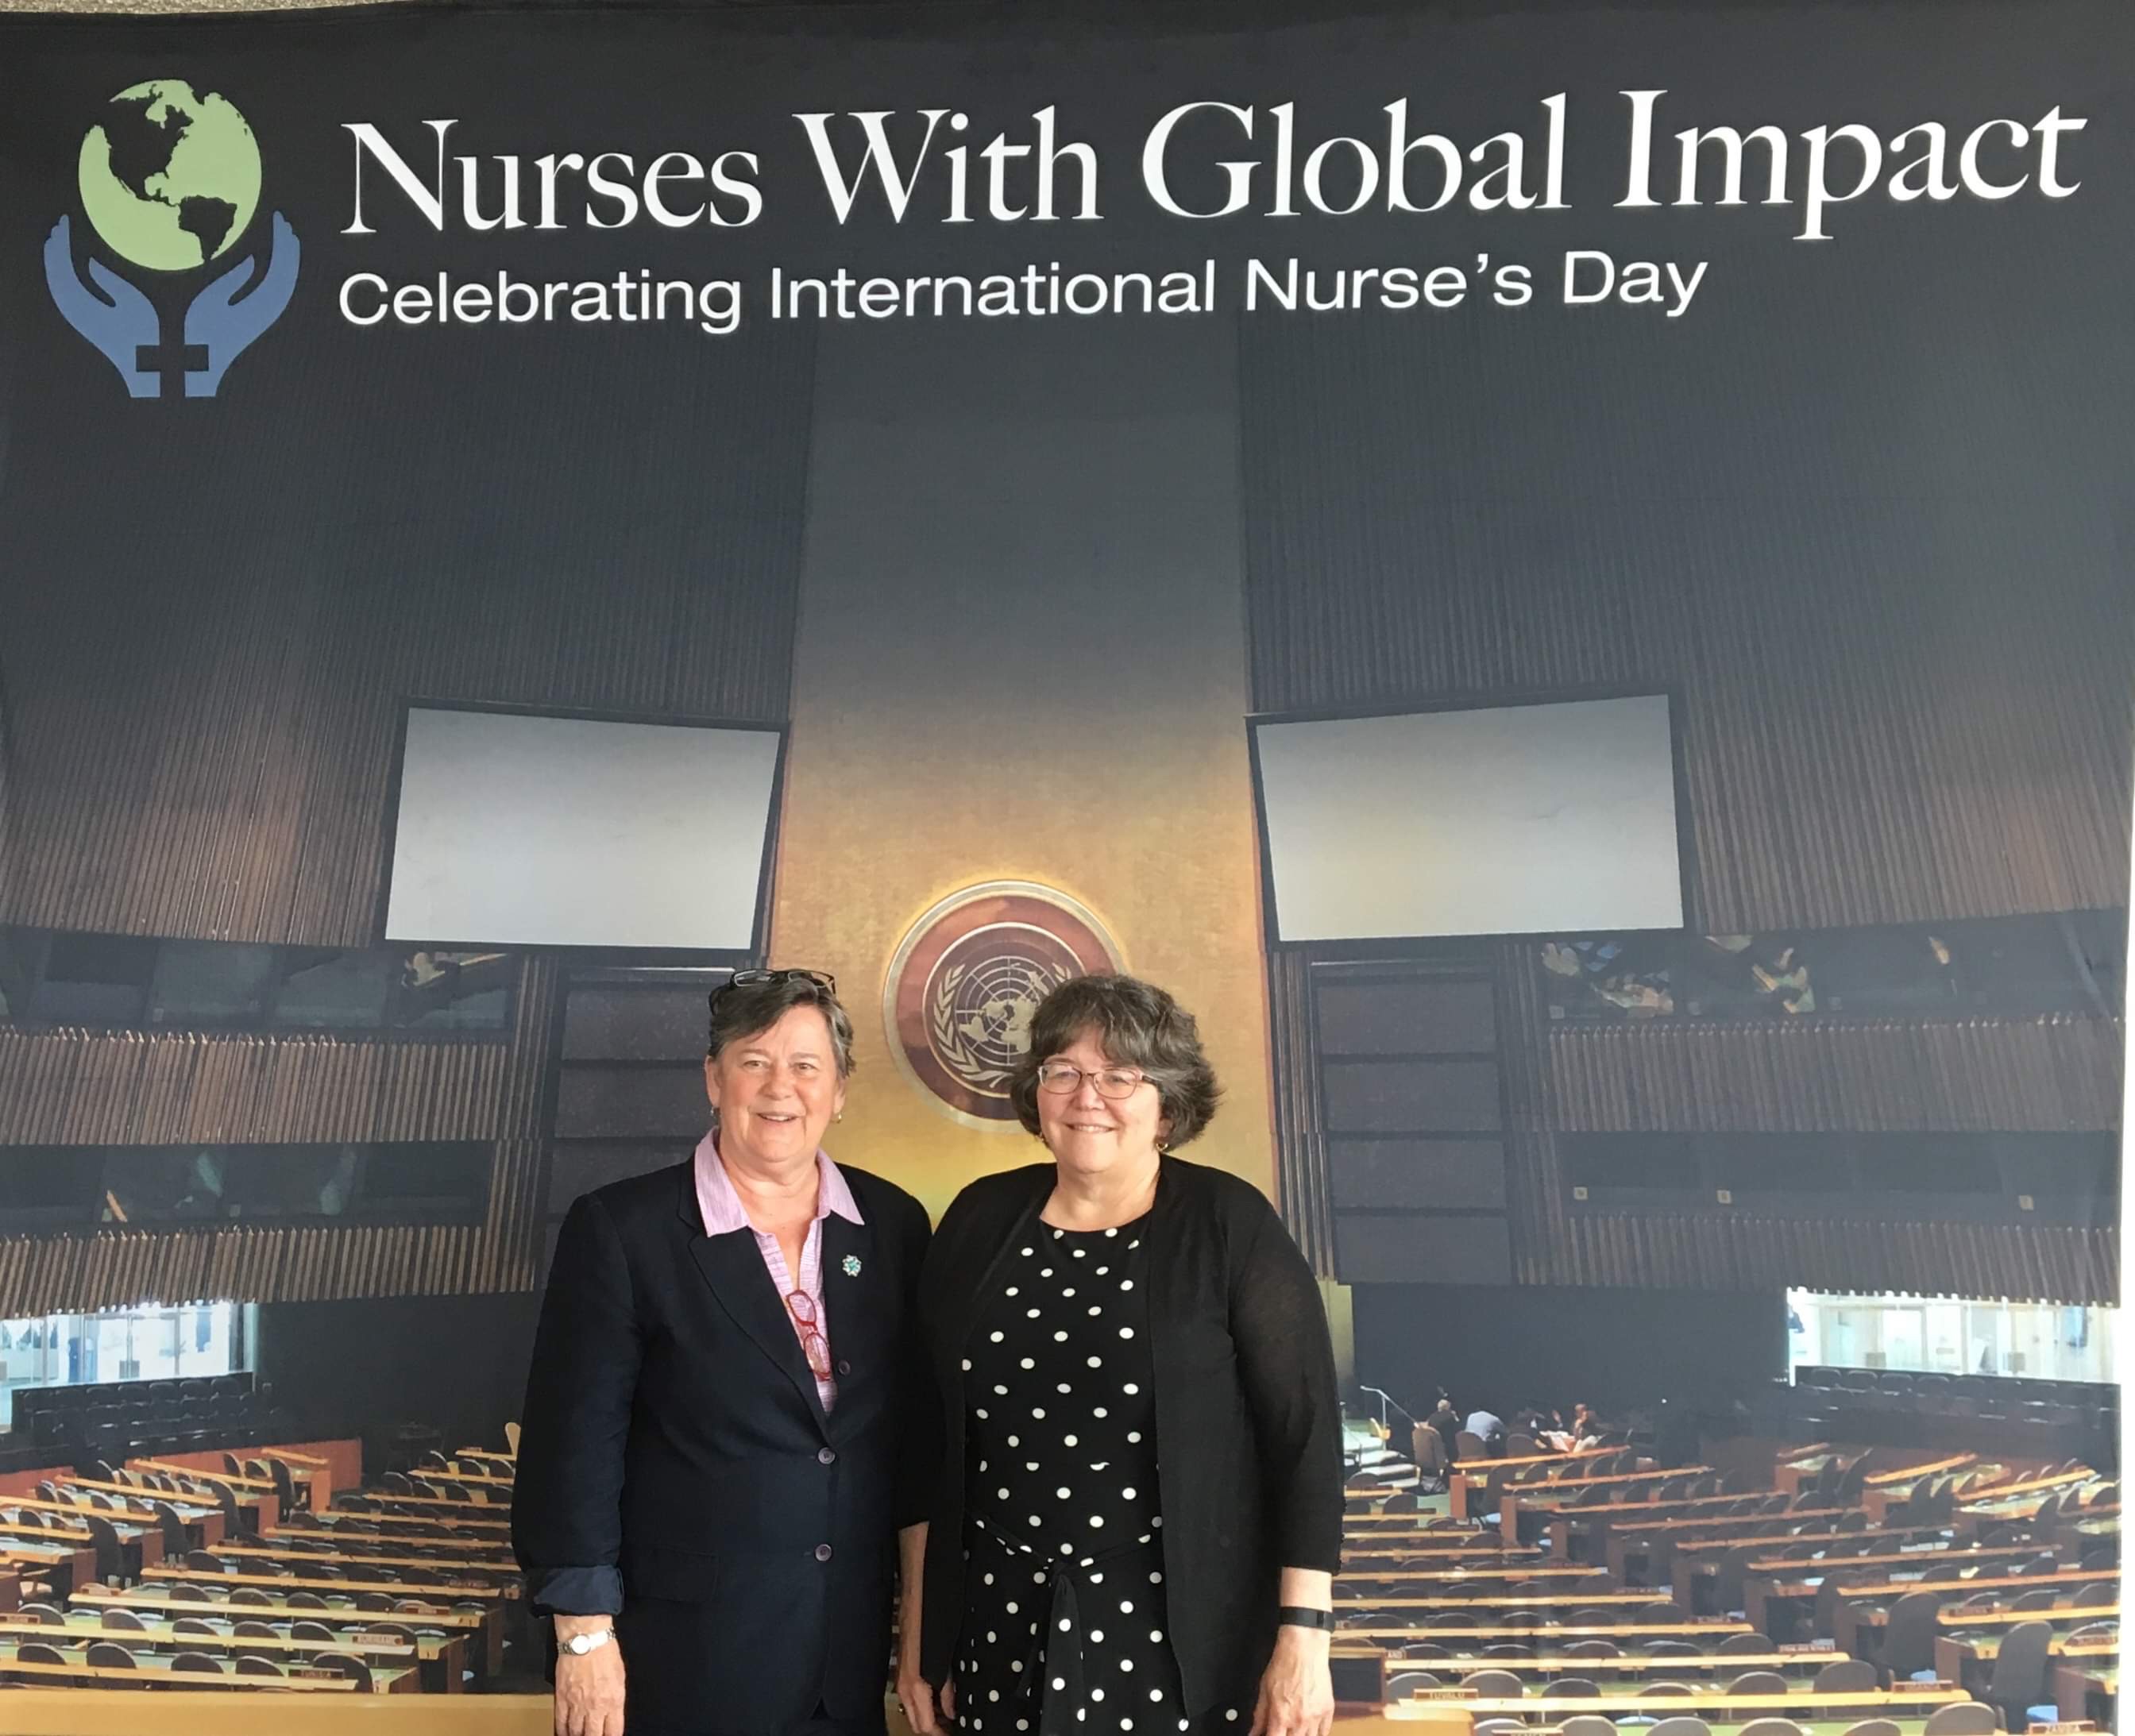 Charon Burda and Katherine Fornili at International Nurse's Day celebrations